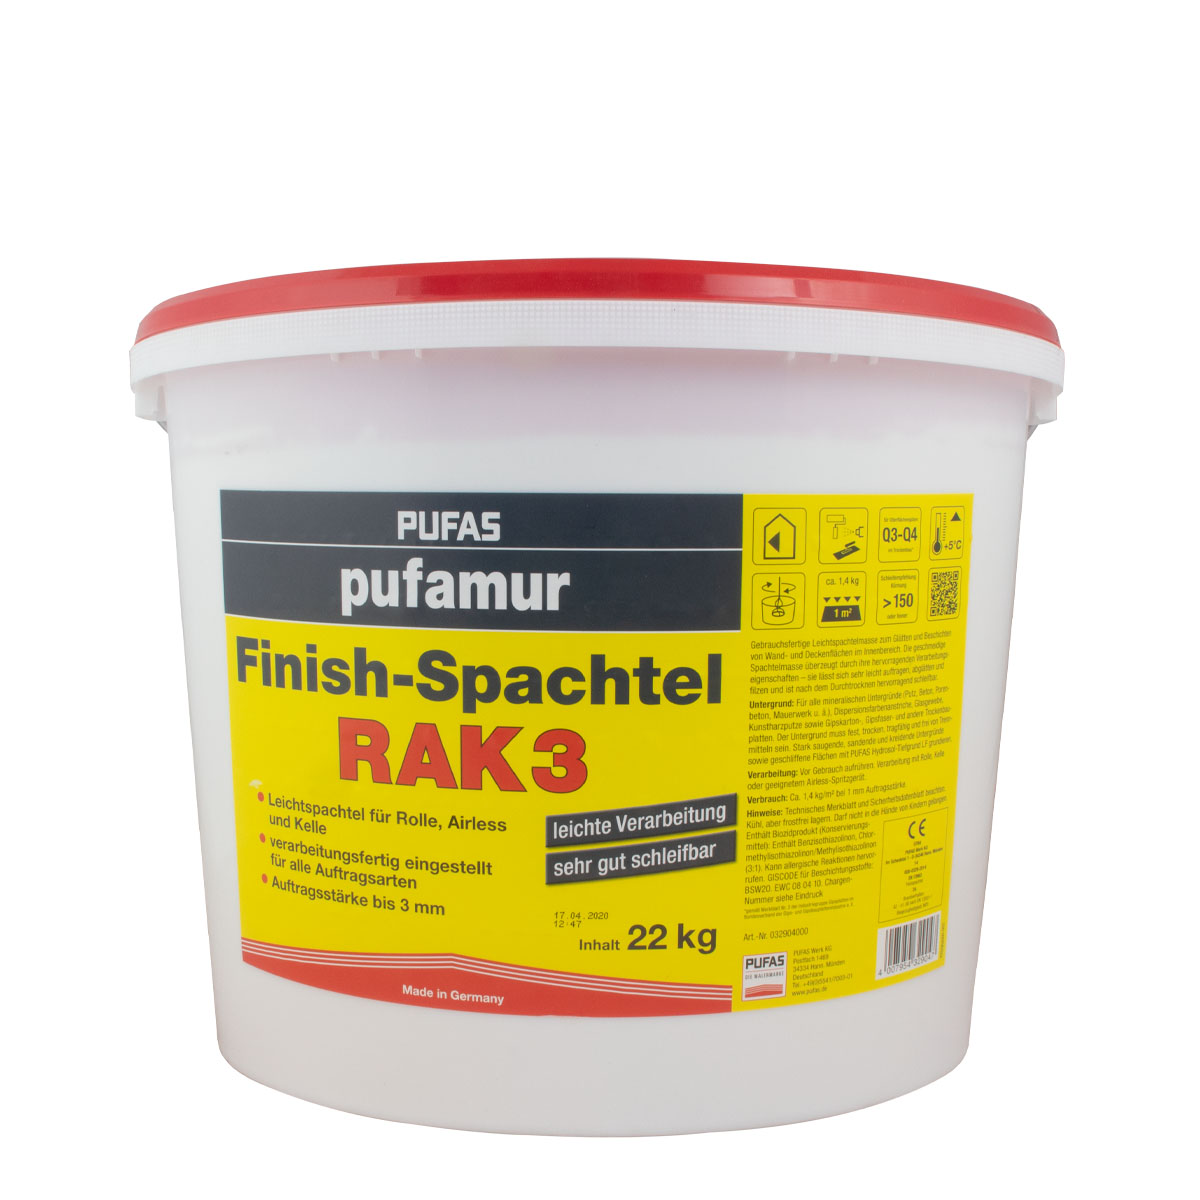 Pufas Pufamur Finish-Spachtel RAK3 22kg, Leichtspachtel